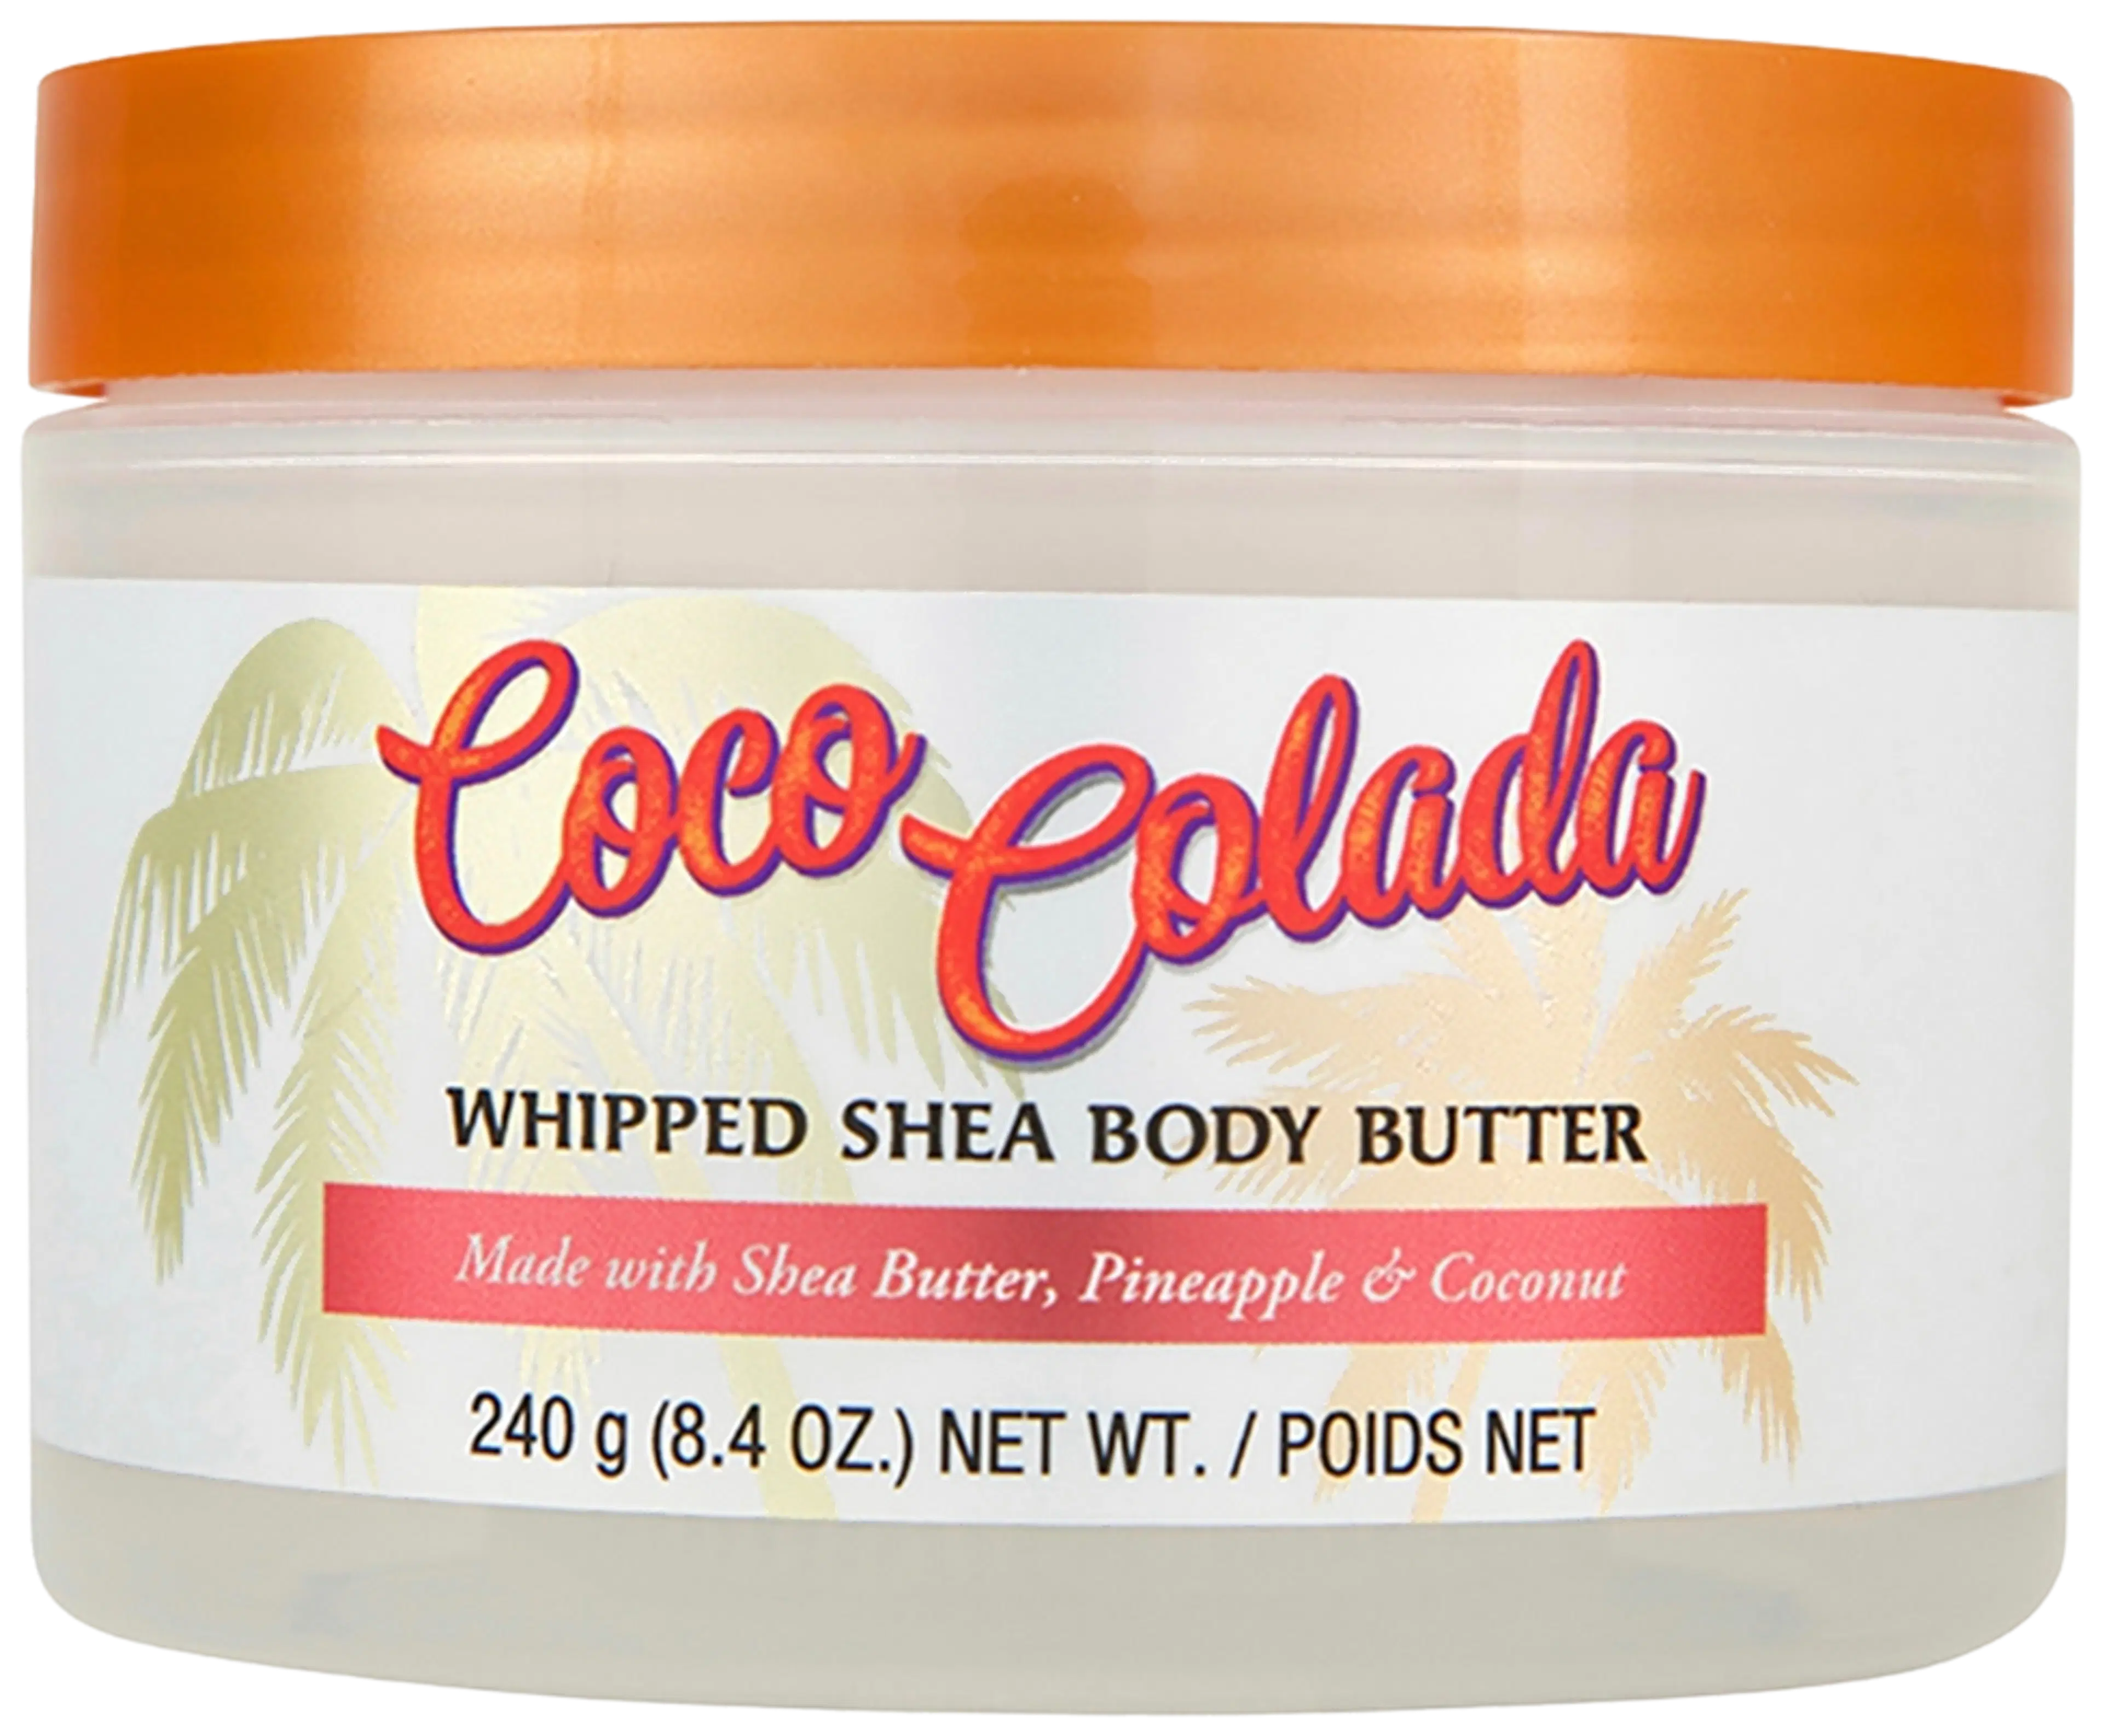 Tree Hut Whipped Body Butter Coco Colada vartalovoi 240g